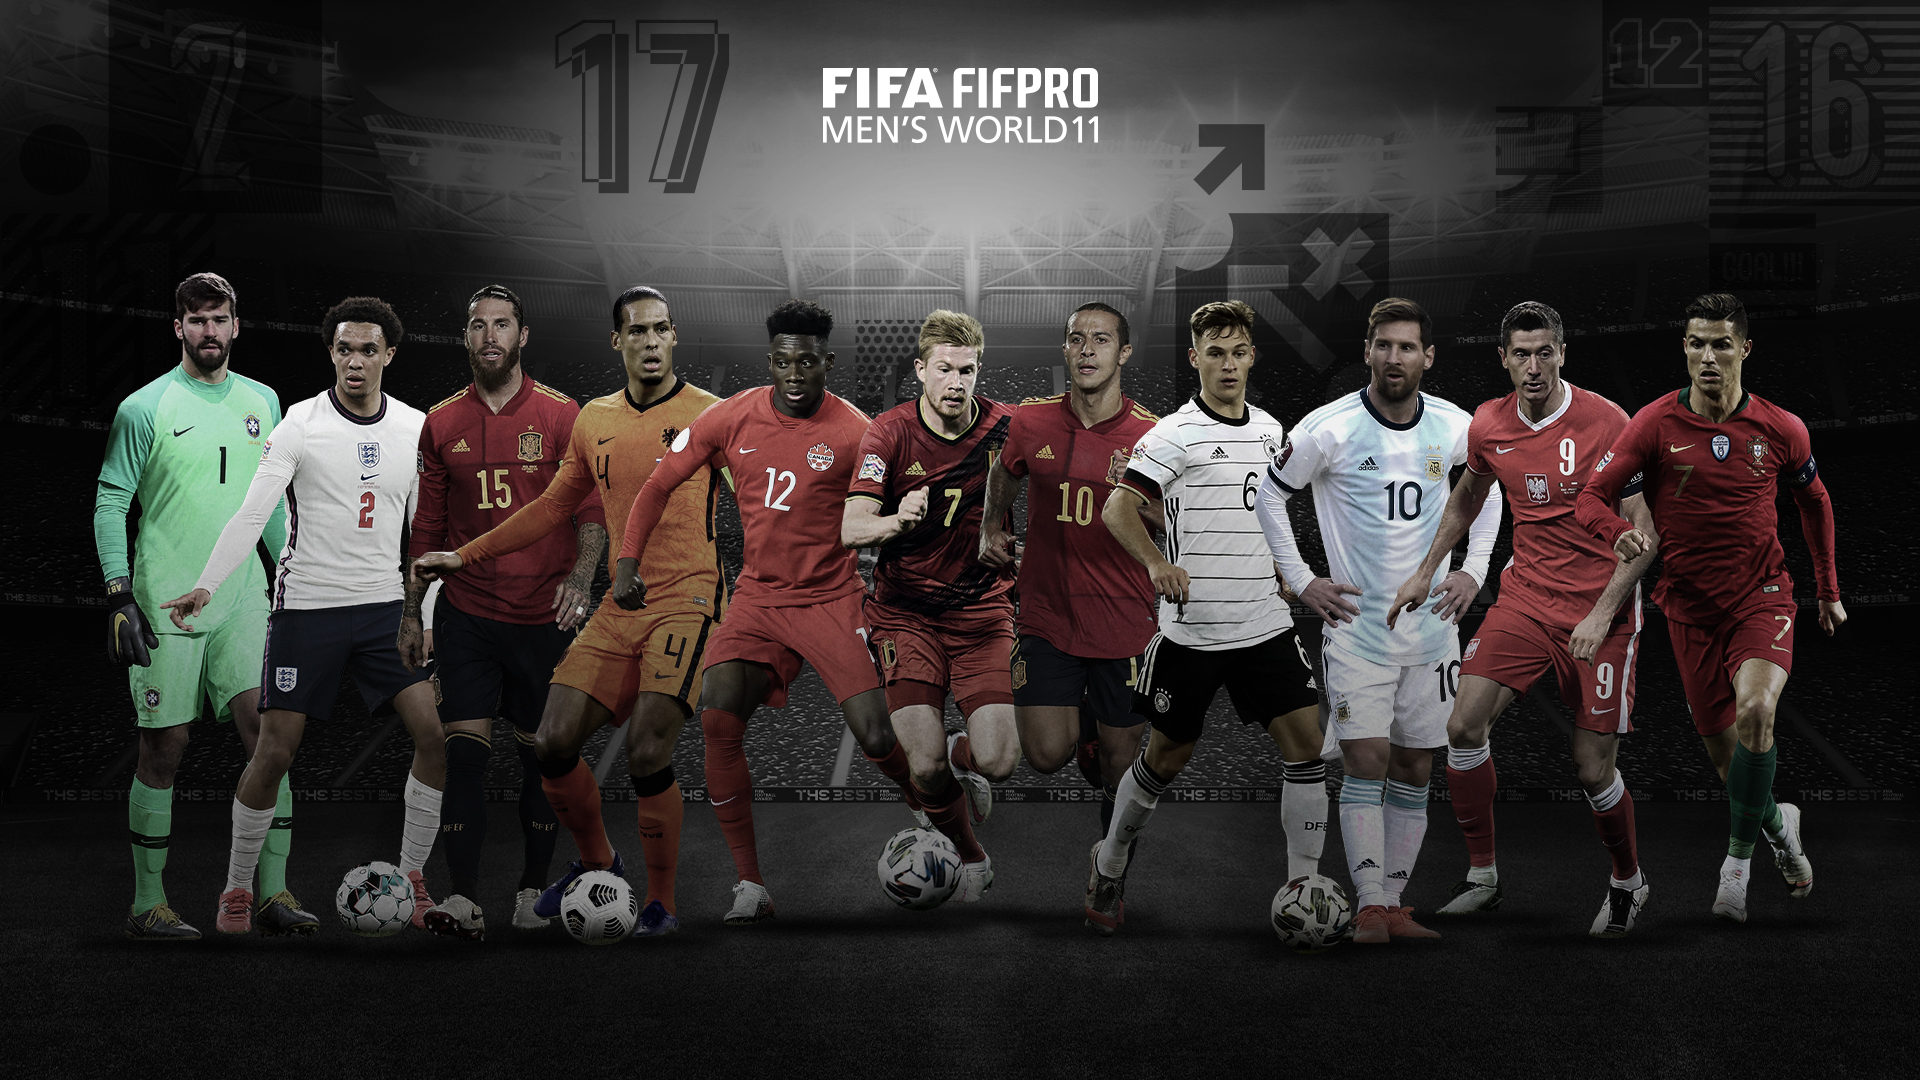 Fifa года. Символическая сборная по футболу 2020. Символическая сборная ФИФА. FIFA FIFPRO World XI. Команда года 2022 футбол ФИФА.